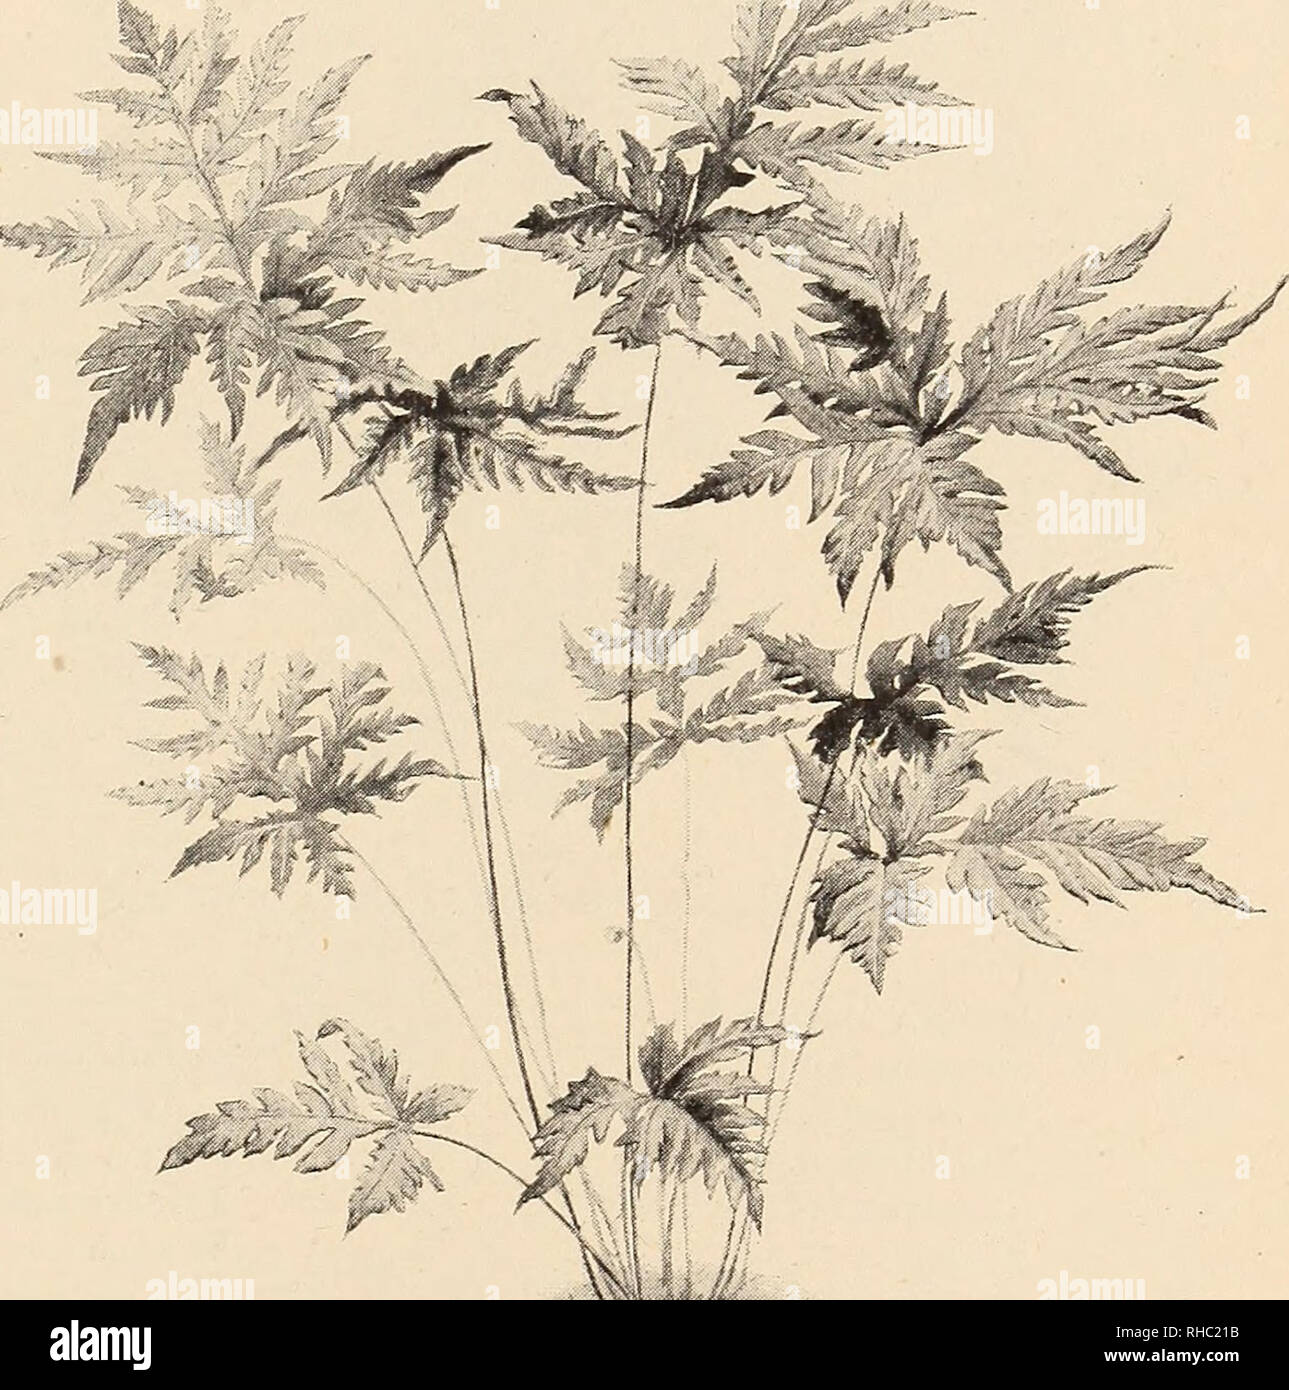 . The Book of gardening; a handbook of horticulture. Gardening; Floriculture. ON FERNS. 5^3 Polypodium lingua. 1. corymbifera. Paradiseae.&quot;^ jPhegopteris. piloselloides. pustulatum. repens.* Schneideri.'^ Polypodium Swartzii.* vaccinifolium.* verrucosum.* fvulgare and varieties. Polystichum capense. Pteris moluccana.&quot;^ scaberula. Trichomanes, most of the known sorts. Woodwardia angustifolia. sporadocarpum.* sub-auriculatum (Fig. 341).* sub-petiolatum.* Those marked * reqitire stove temperature ; those marked -j- are perfectly hardy. Schizaea, all known sorts.* Taenitis, all known sor Stock Photo